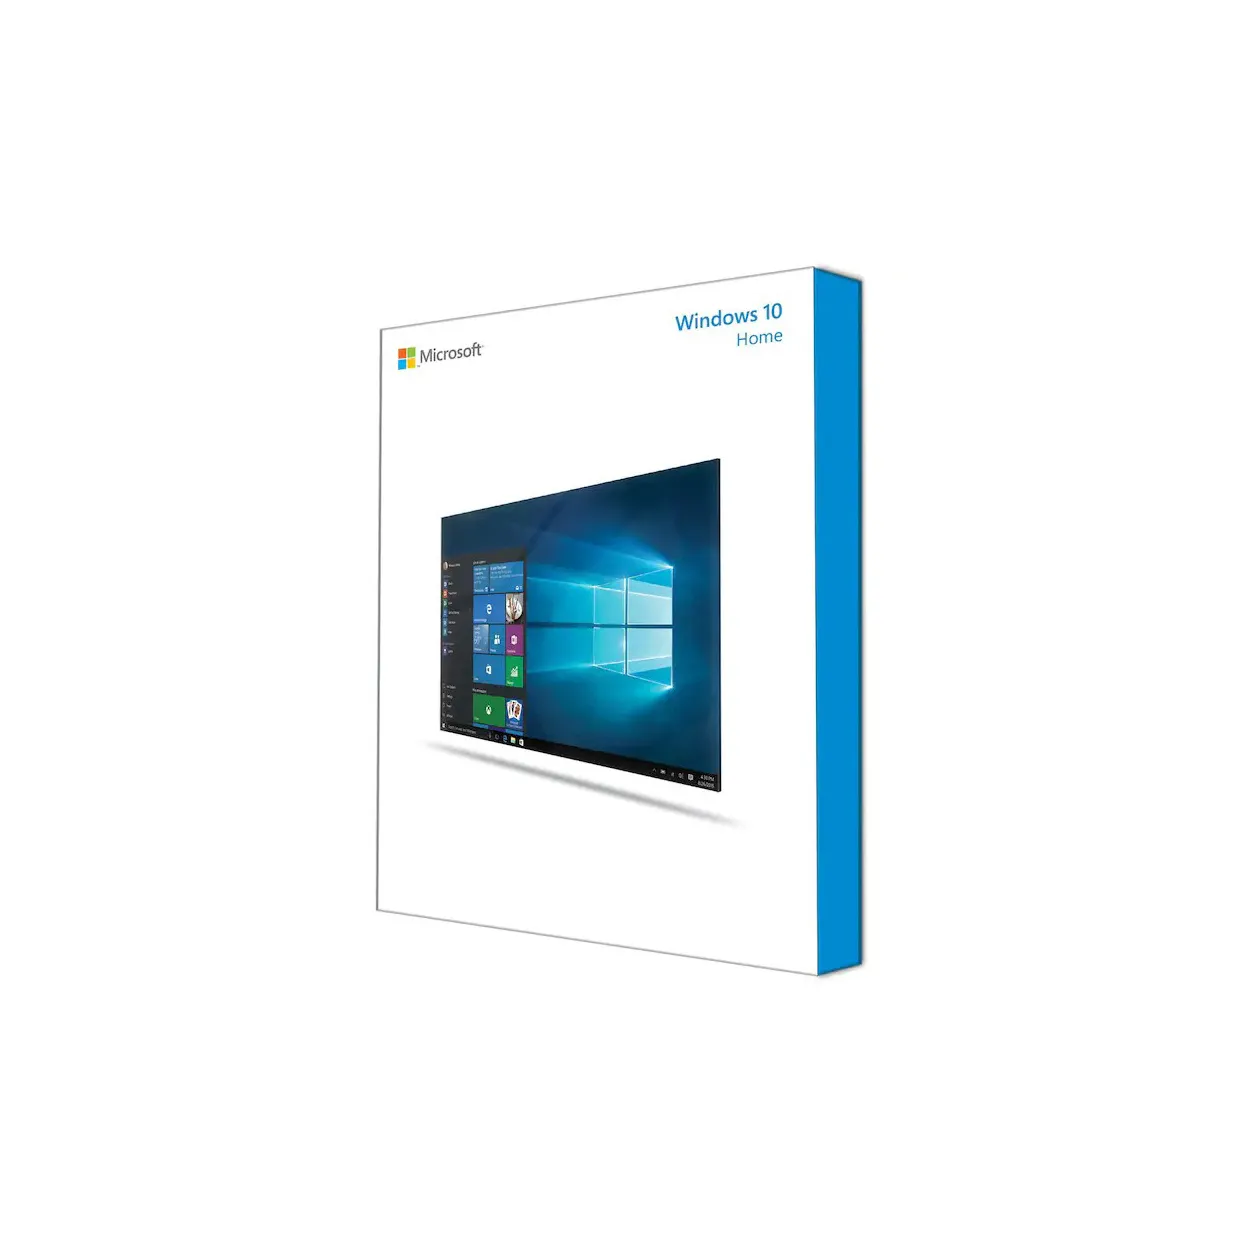 Microsoft Windows 10 Home USB Pack, доступна Бесплатная загрузка